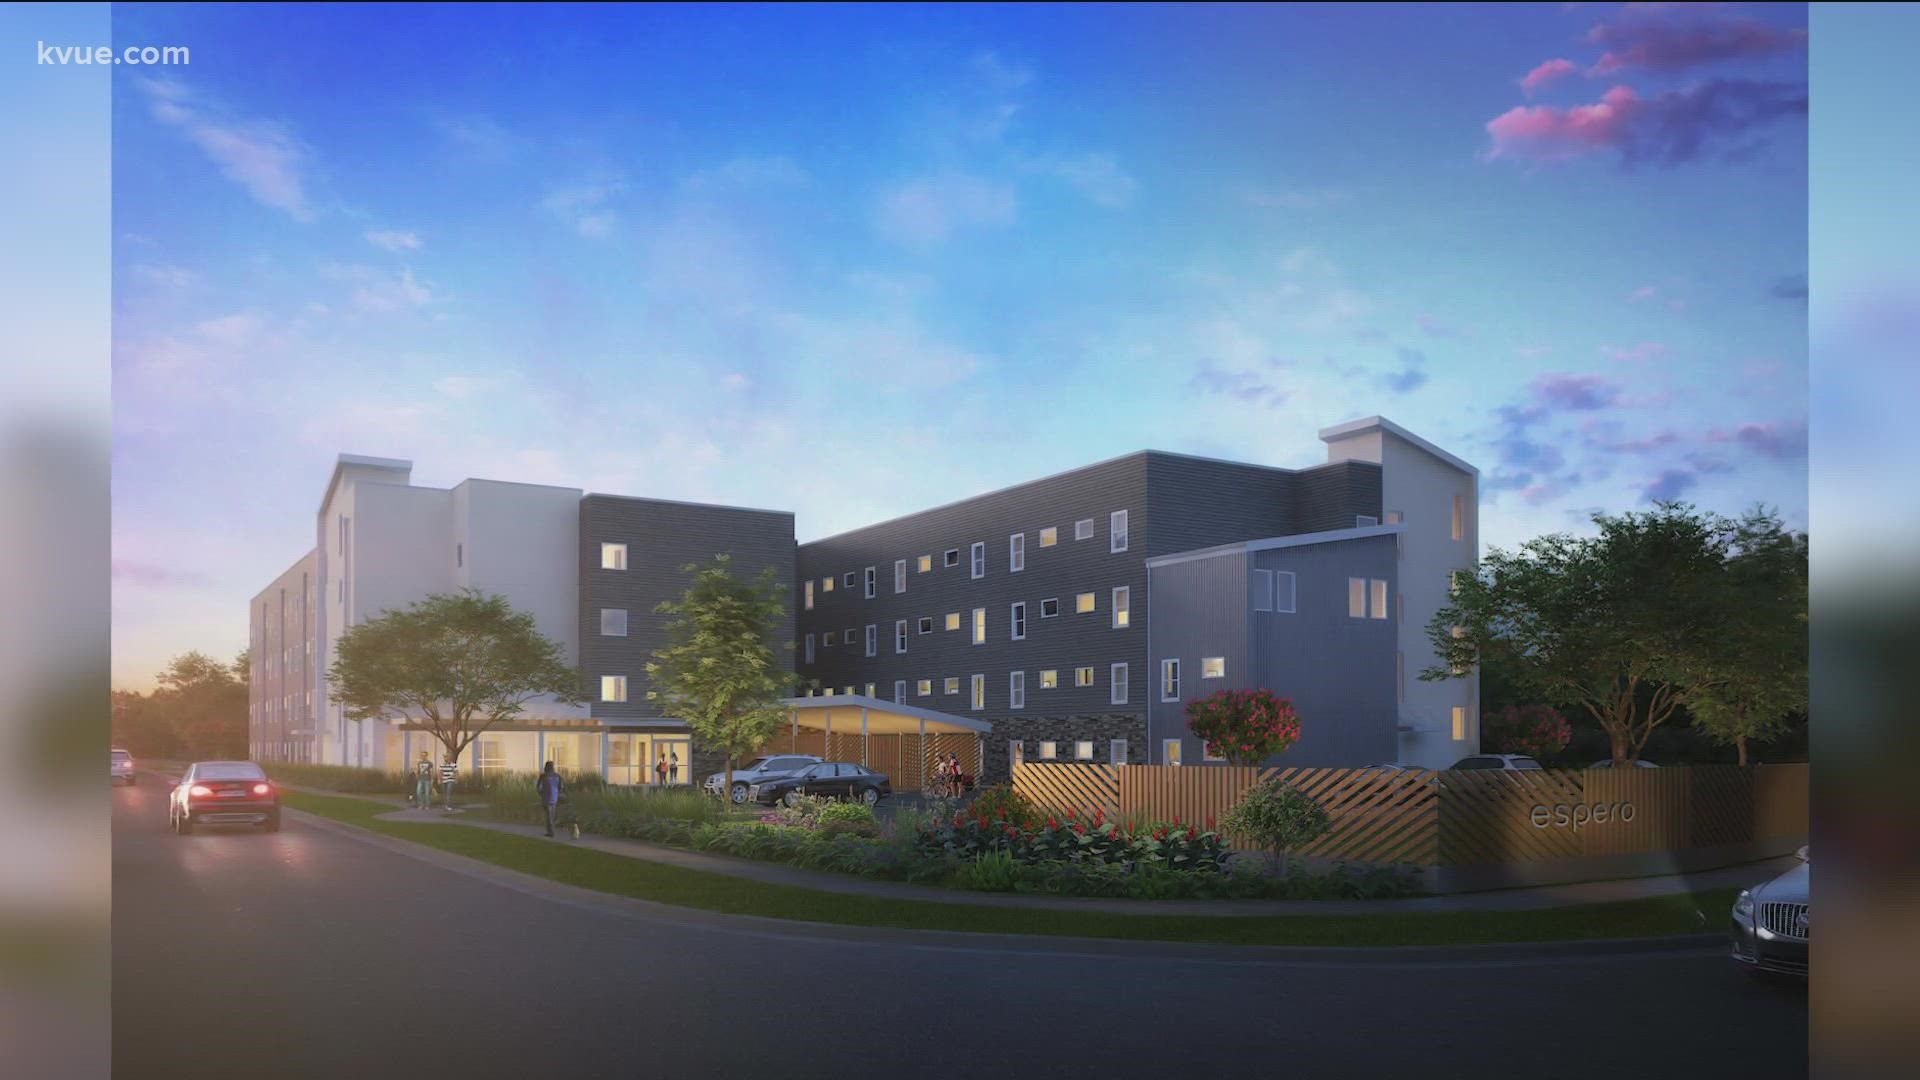 CVS Health is investing more than $11 million into the Espero Austin at Rutland complex in North Austin.